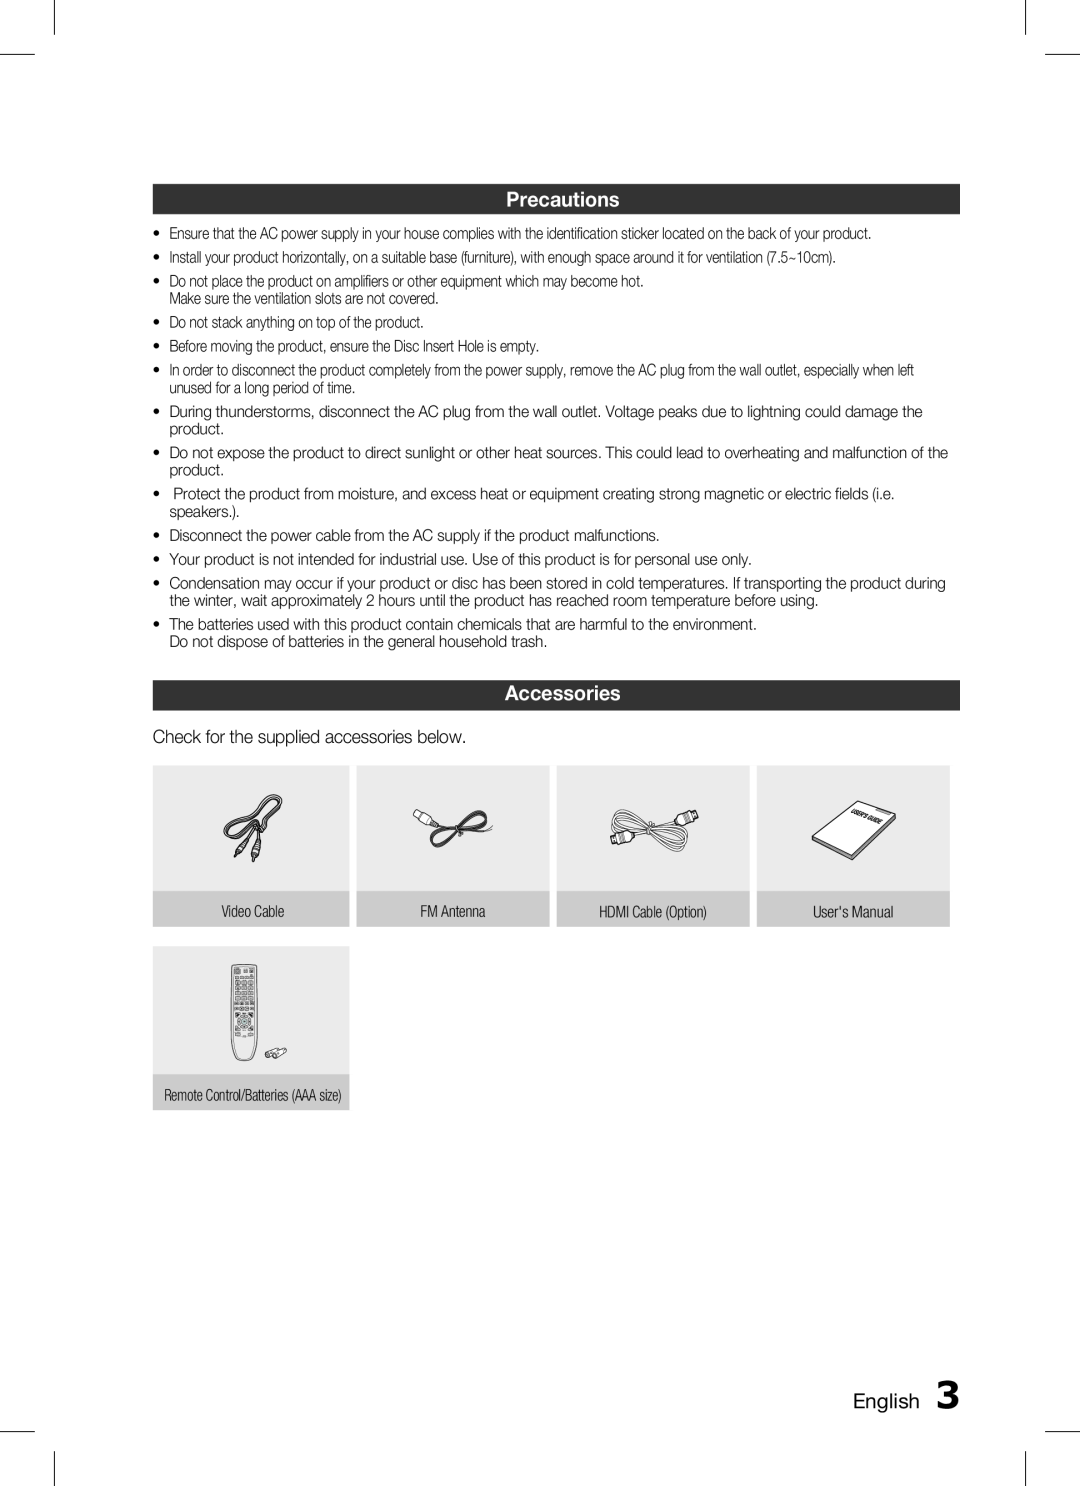 Samsung HT-C350, AH68-02293B user manual Precautions, Accessories, English  